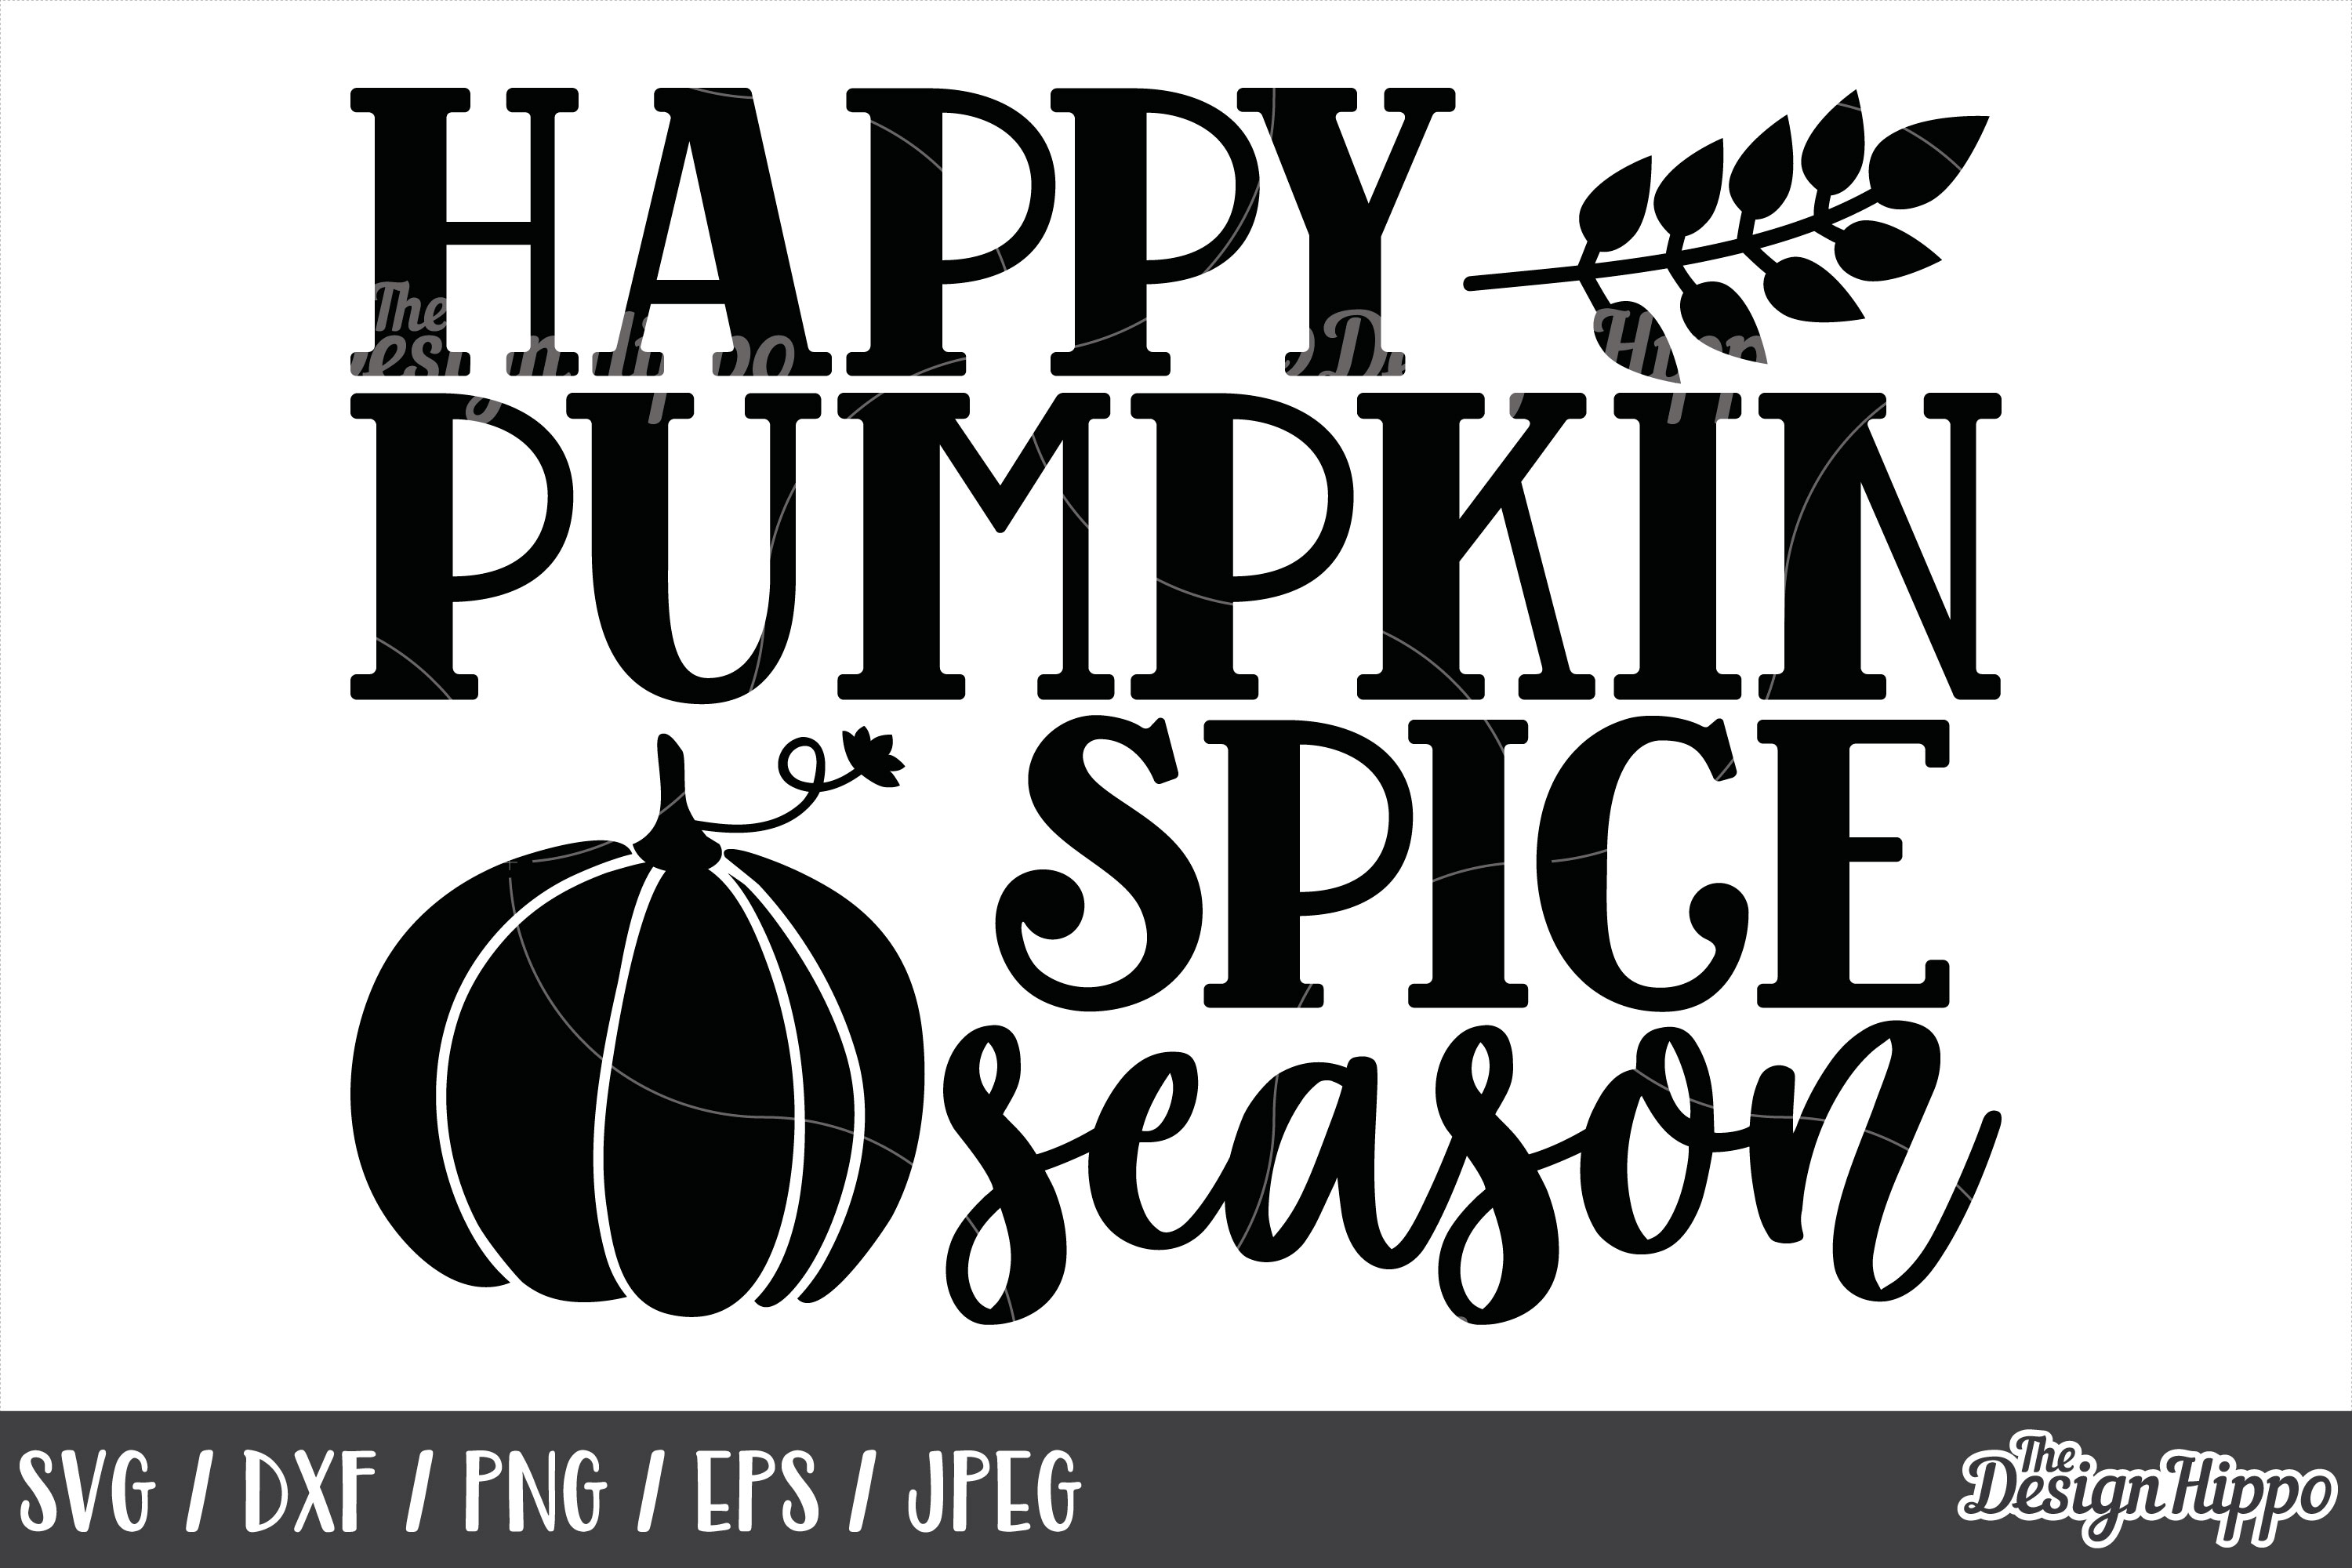 Download Happy pumpkin spice season SVG, Fall, Autumn, Pumpkin spice